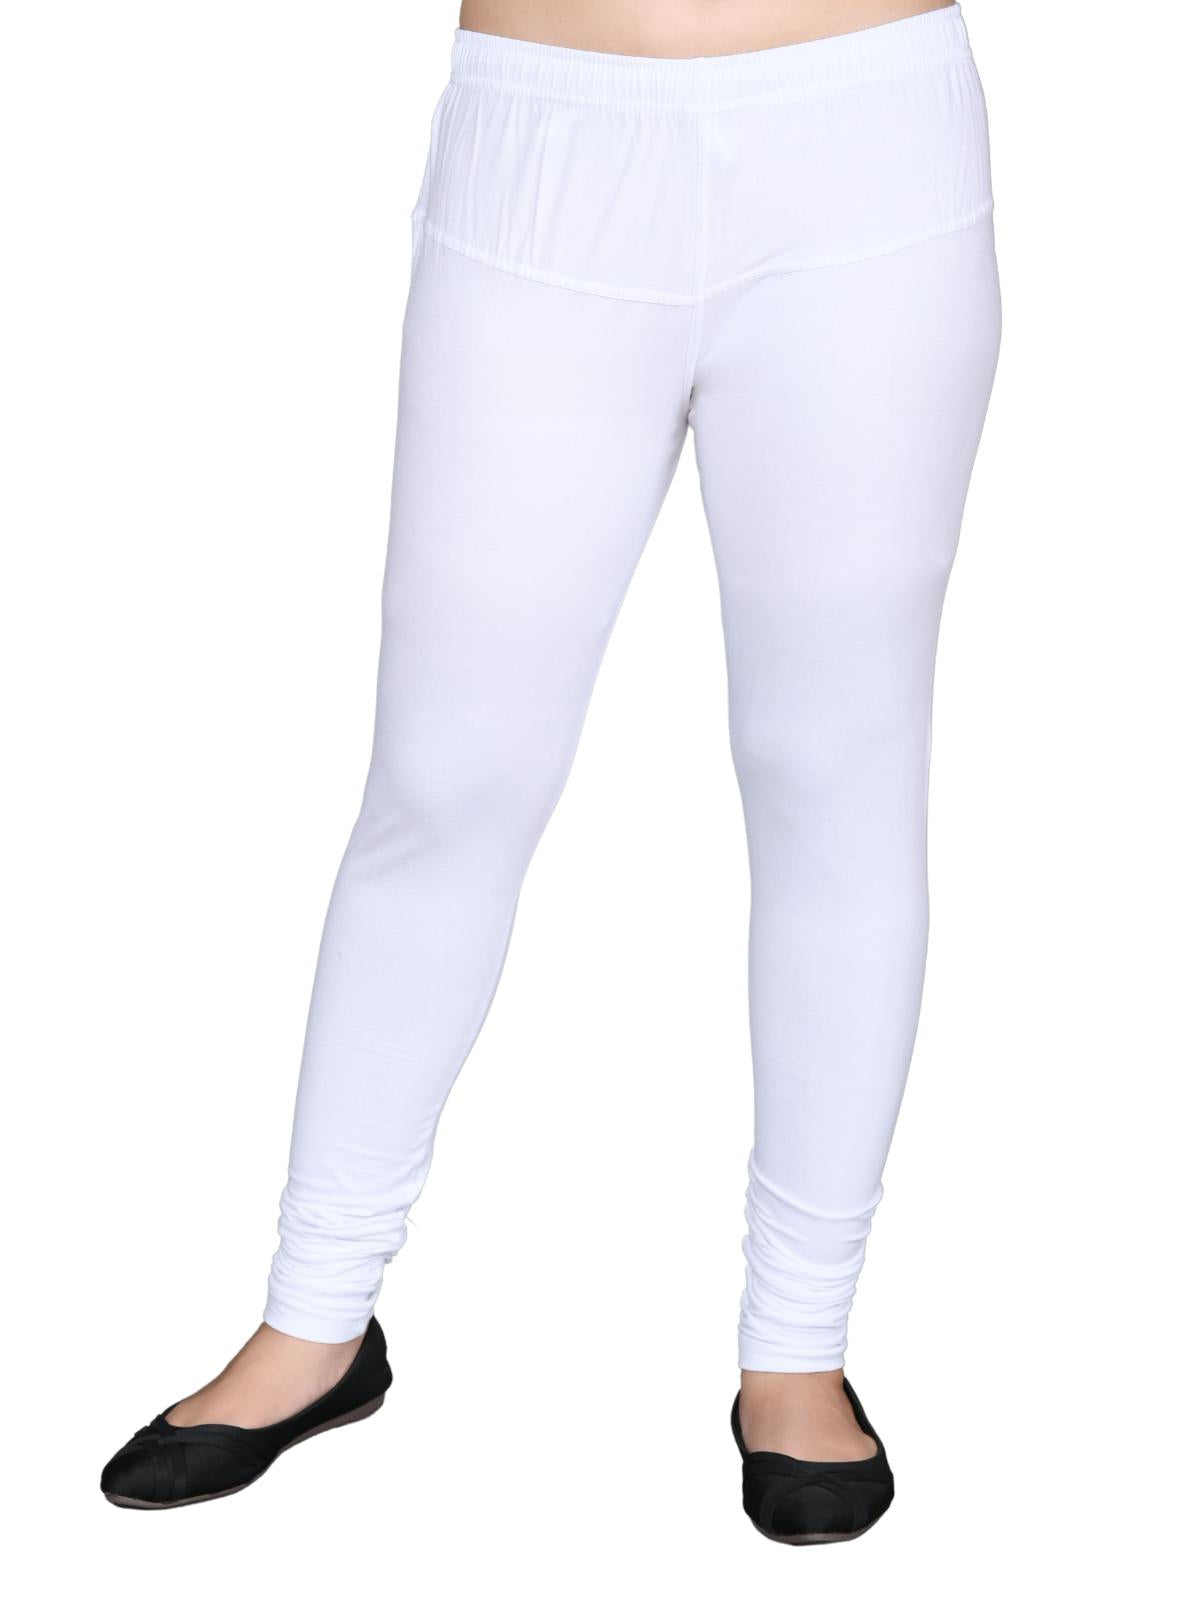 TCG Bio wash 100% pure Cotton with Spandex Light Orange & White Churidar  leggings 2pcs